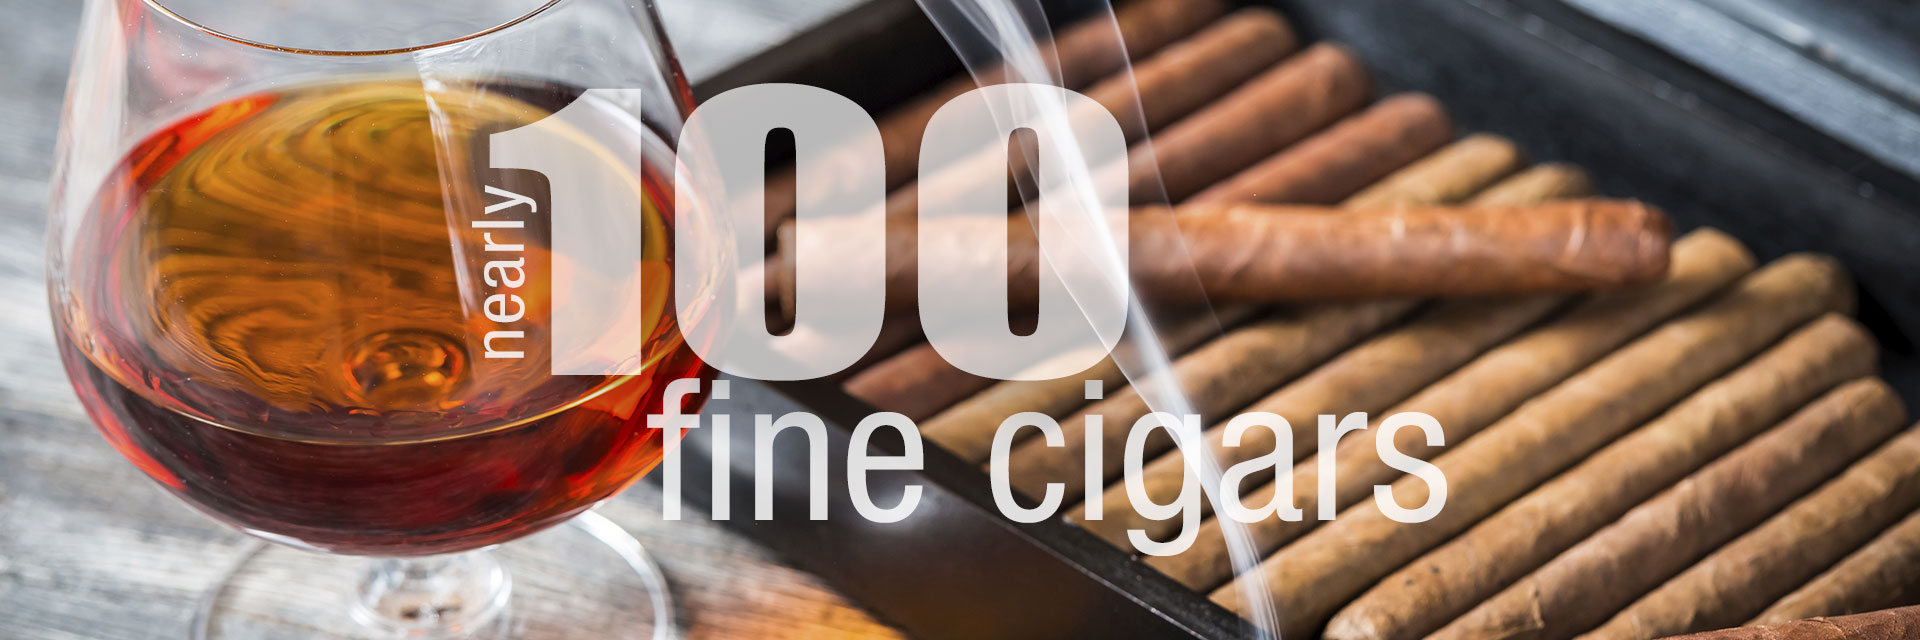 Nearly 100 Fine Cigars